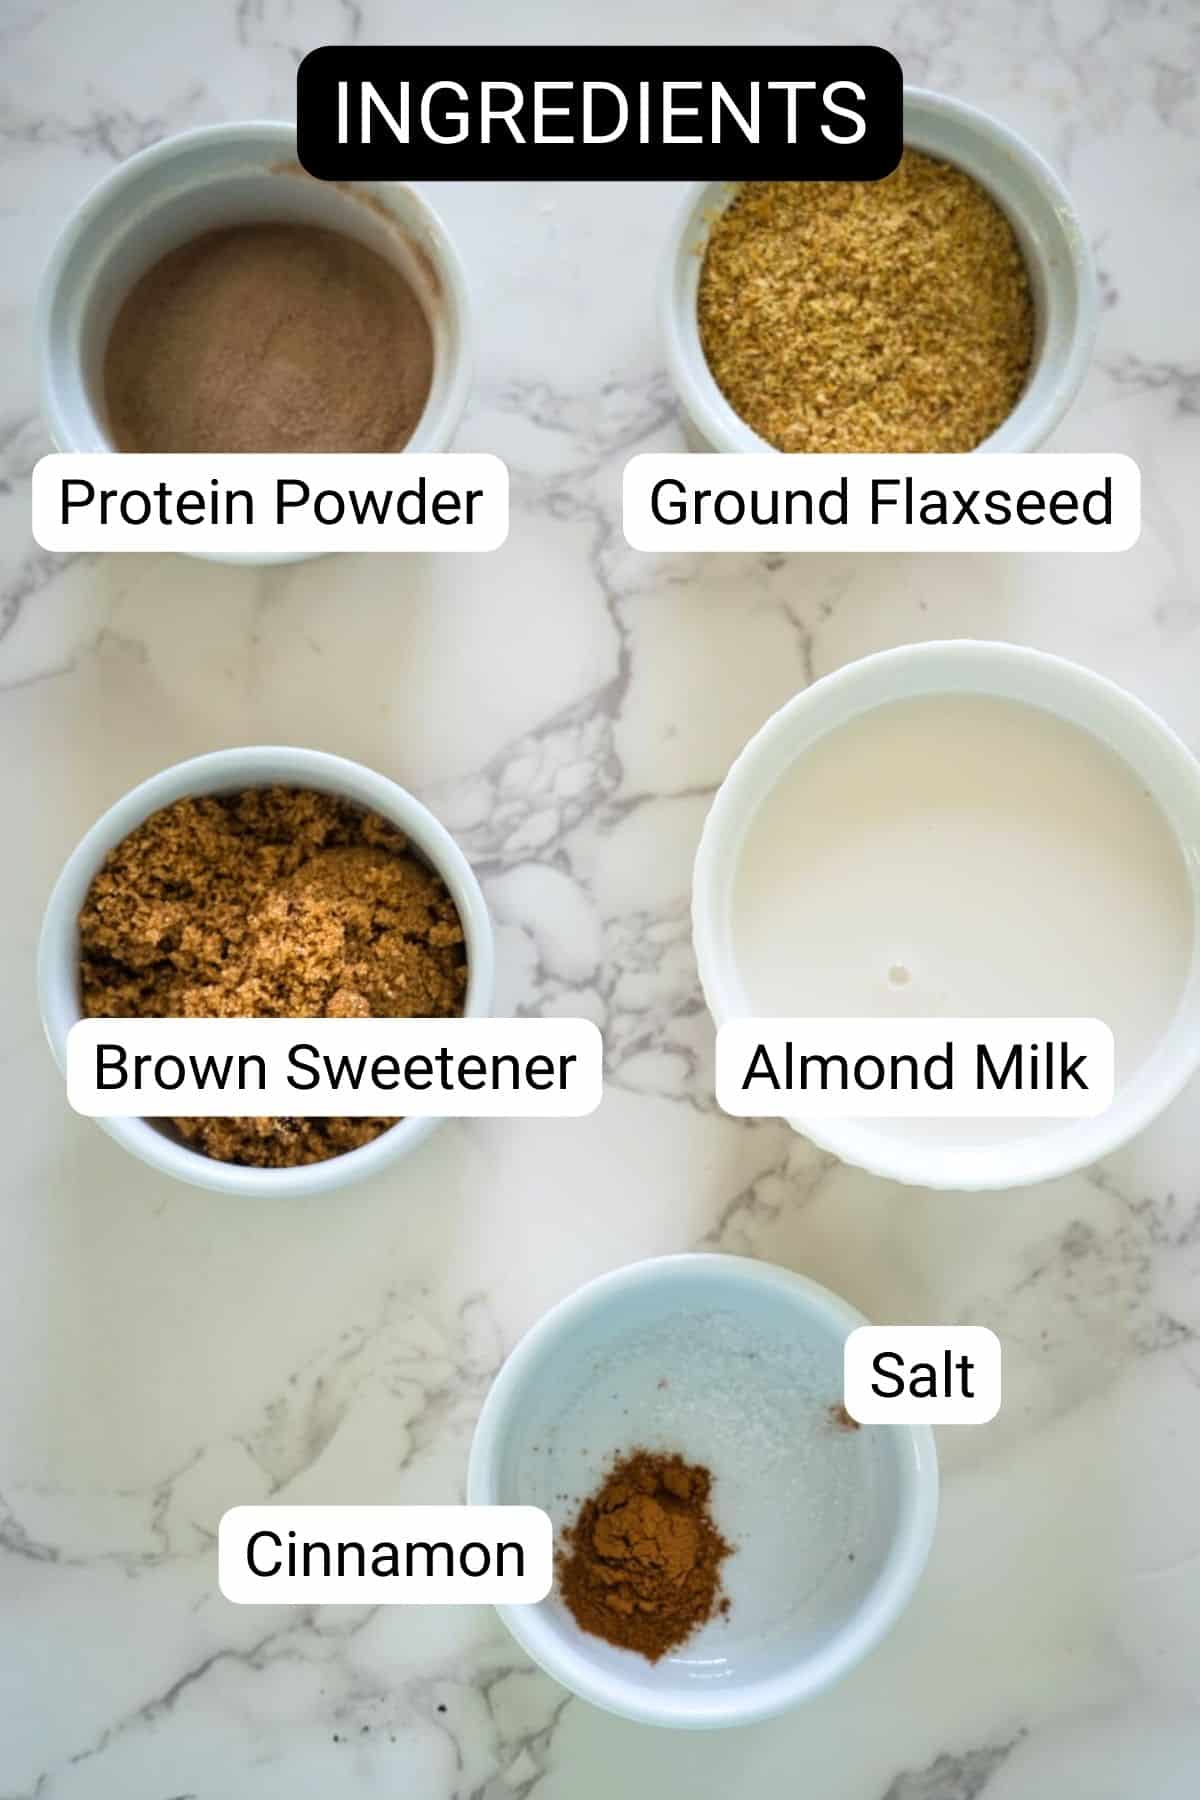 Bowls of various baking ingredients labeled: protein powder, ground flaxseed, brown sweetener, almond milk, salt, and cinnamon.